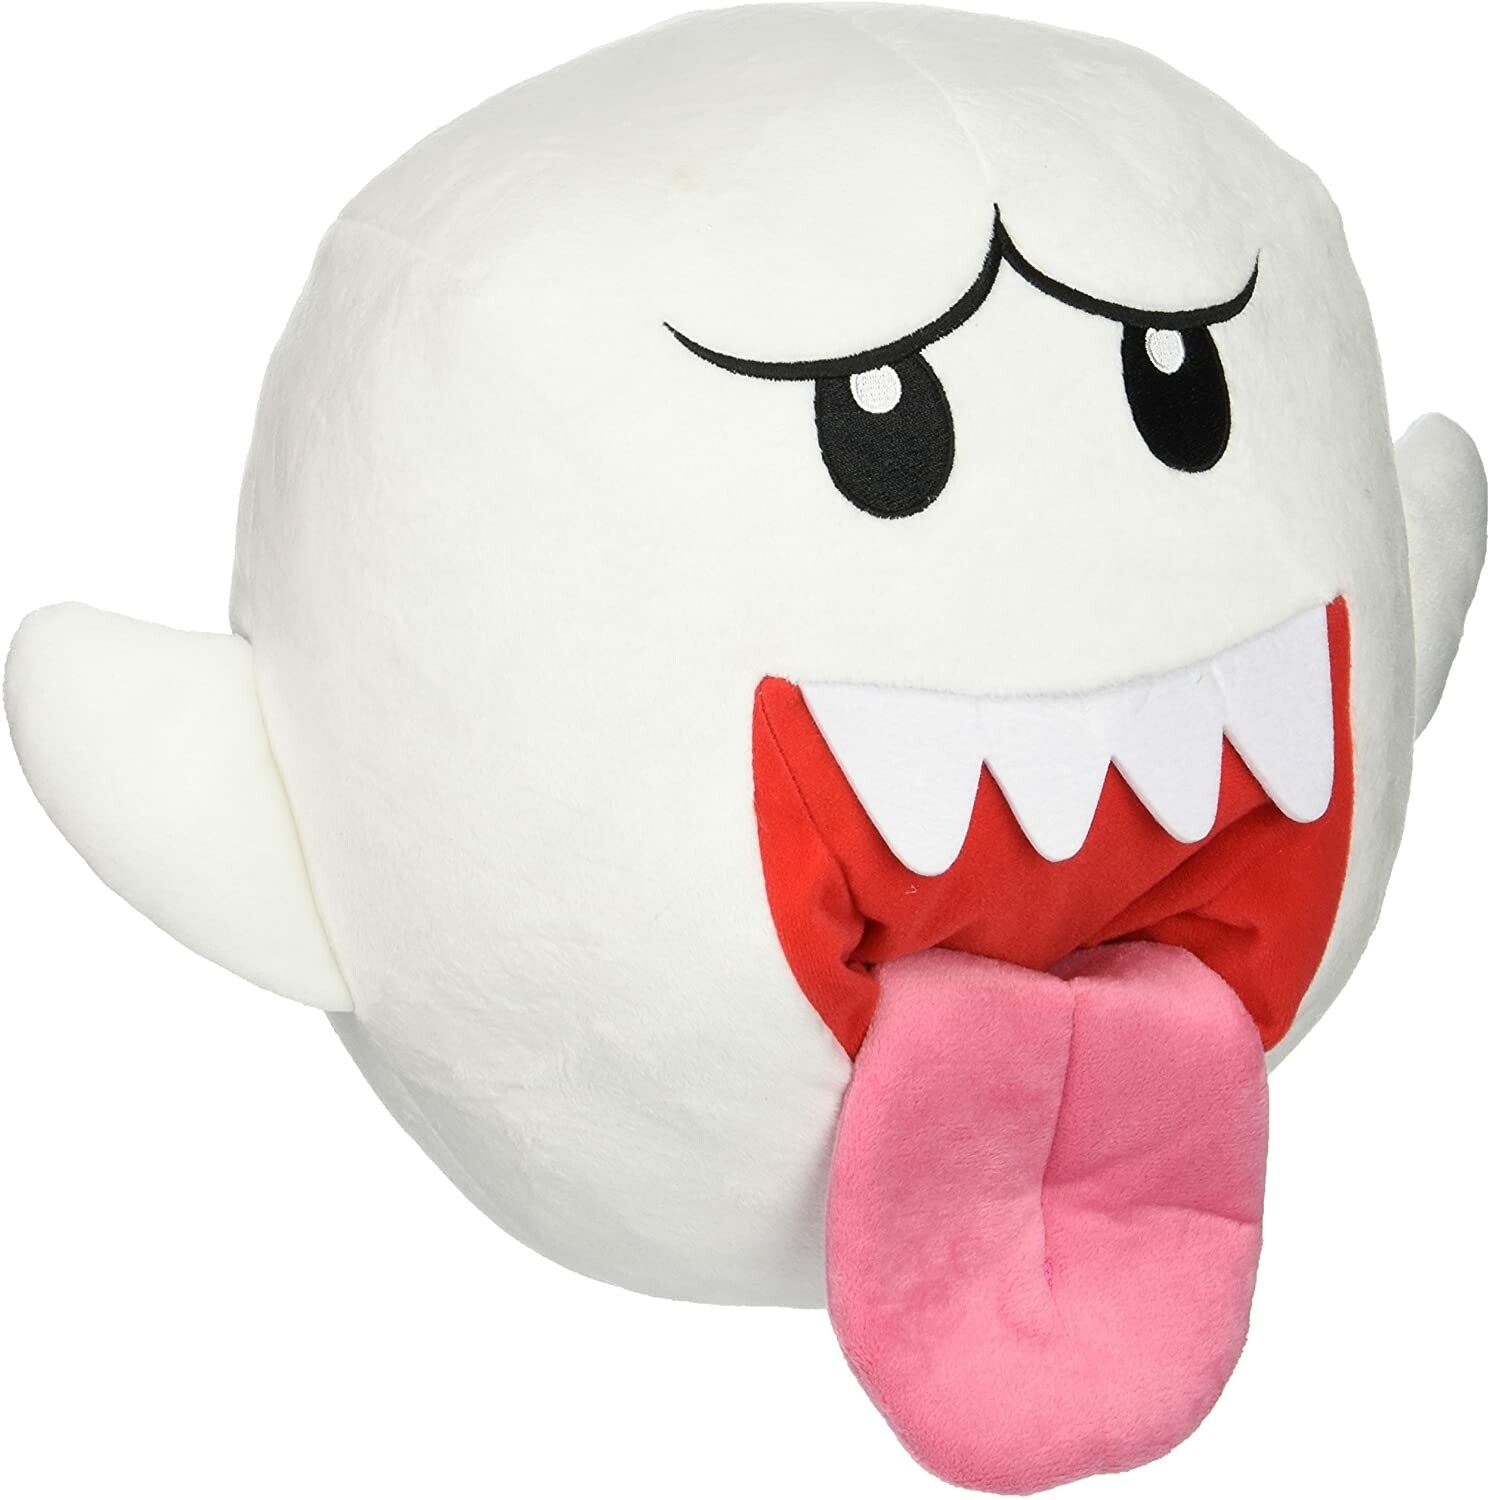 Super Mario Boo Large Plush